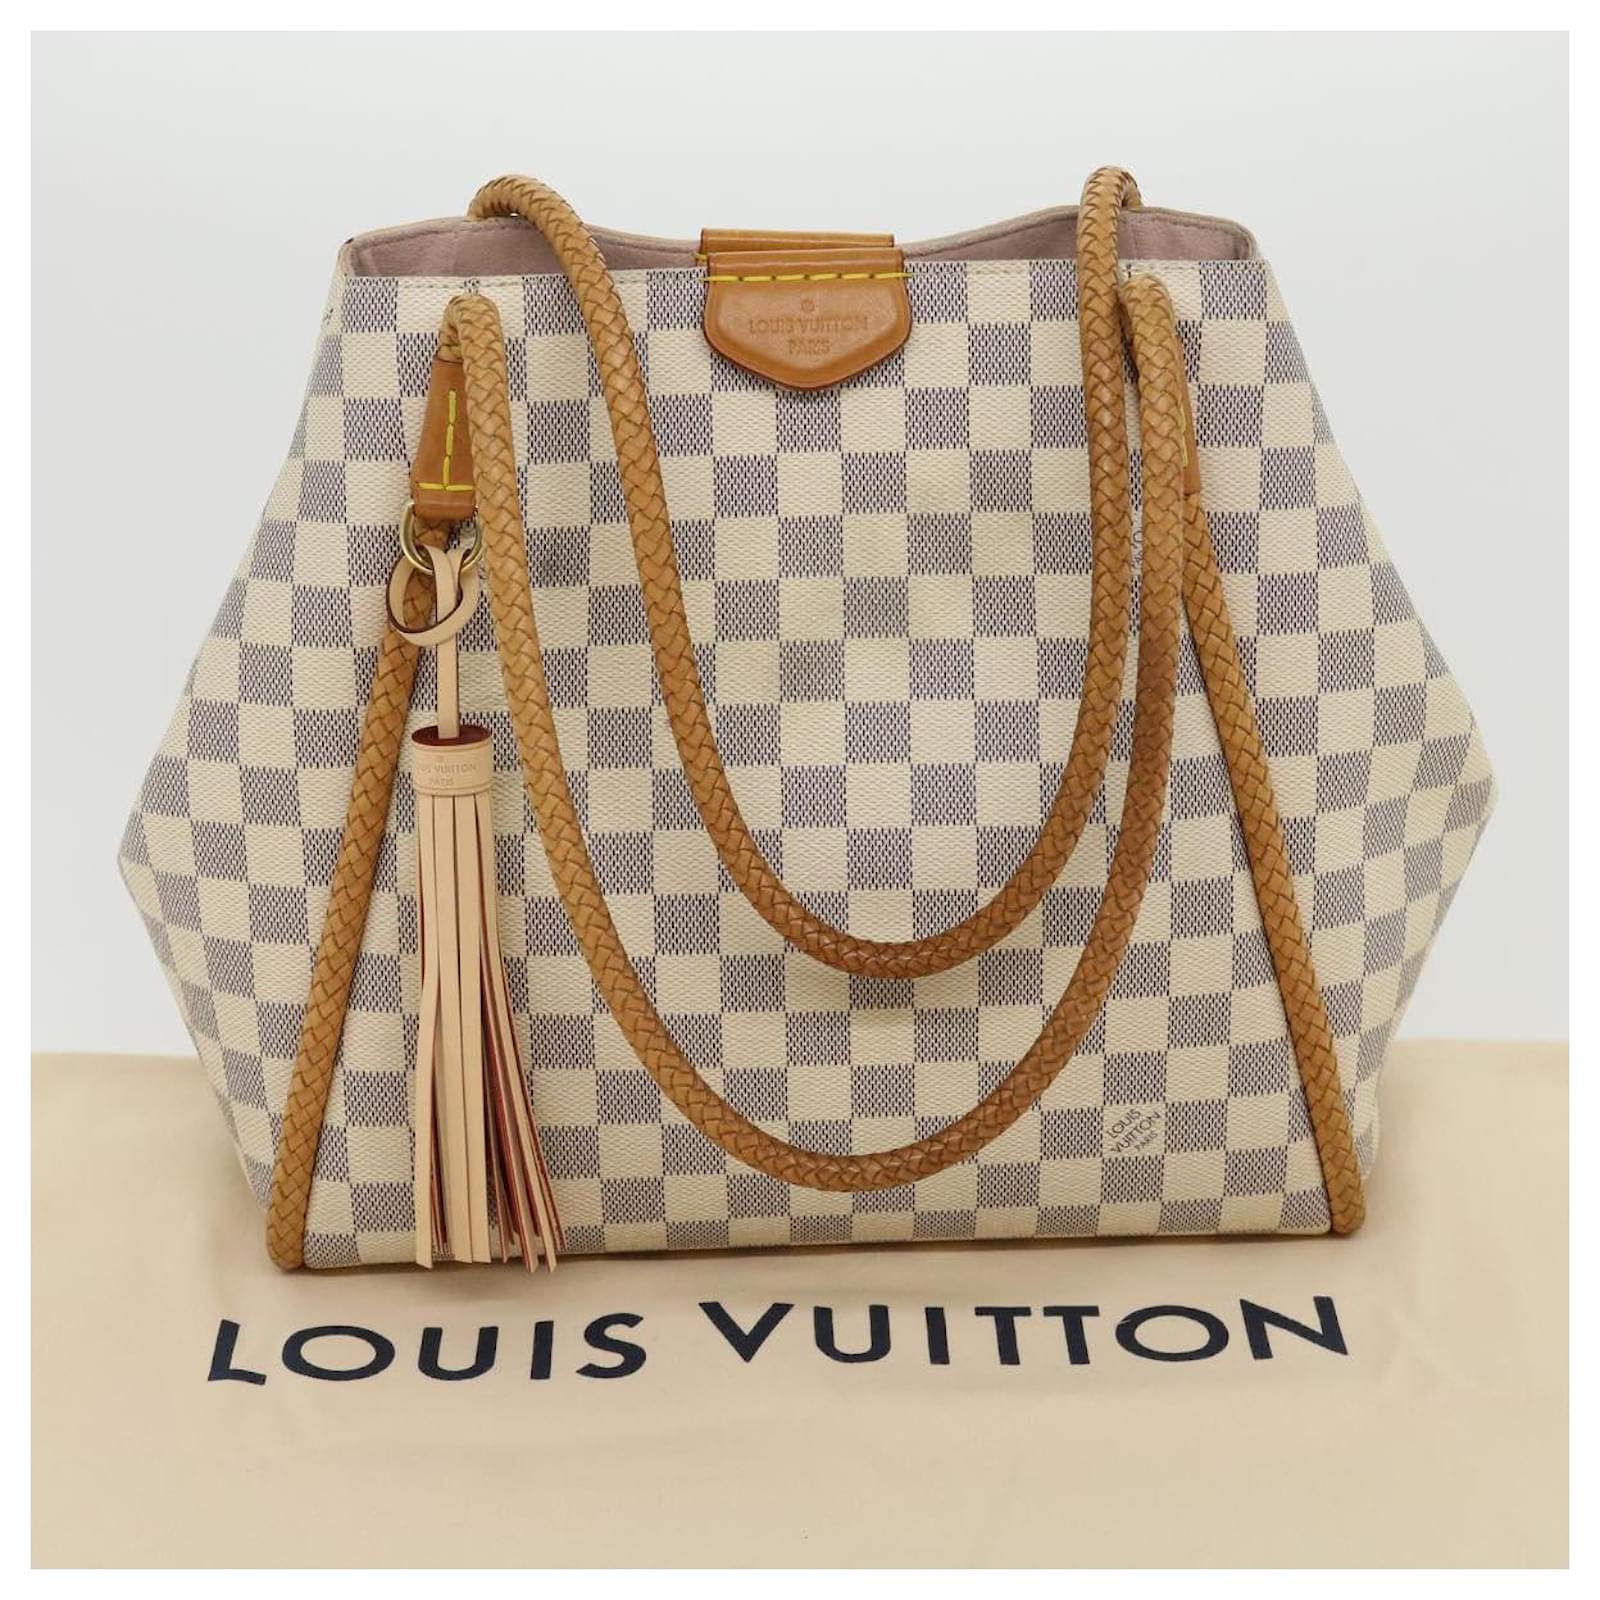 LOUIS VUITTON DAMIER Azur Propriano N44027 Shoulder Bag france